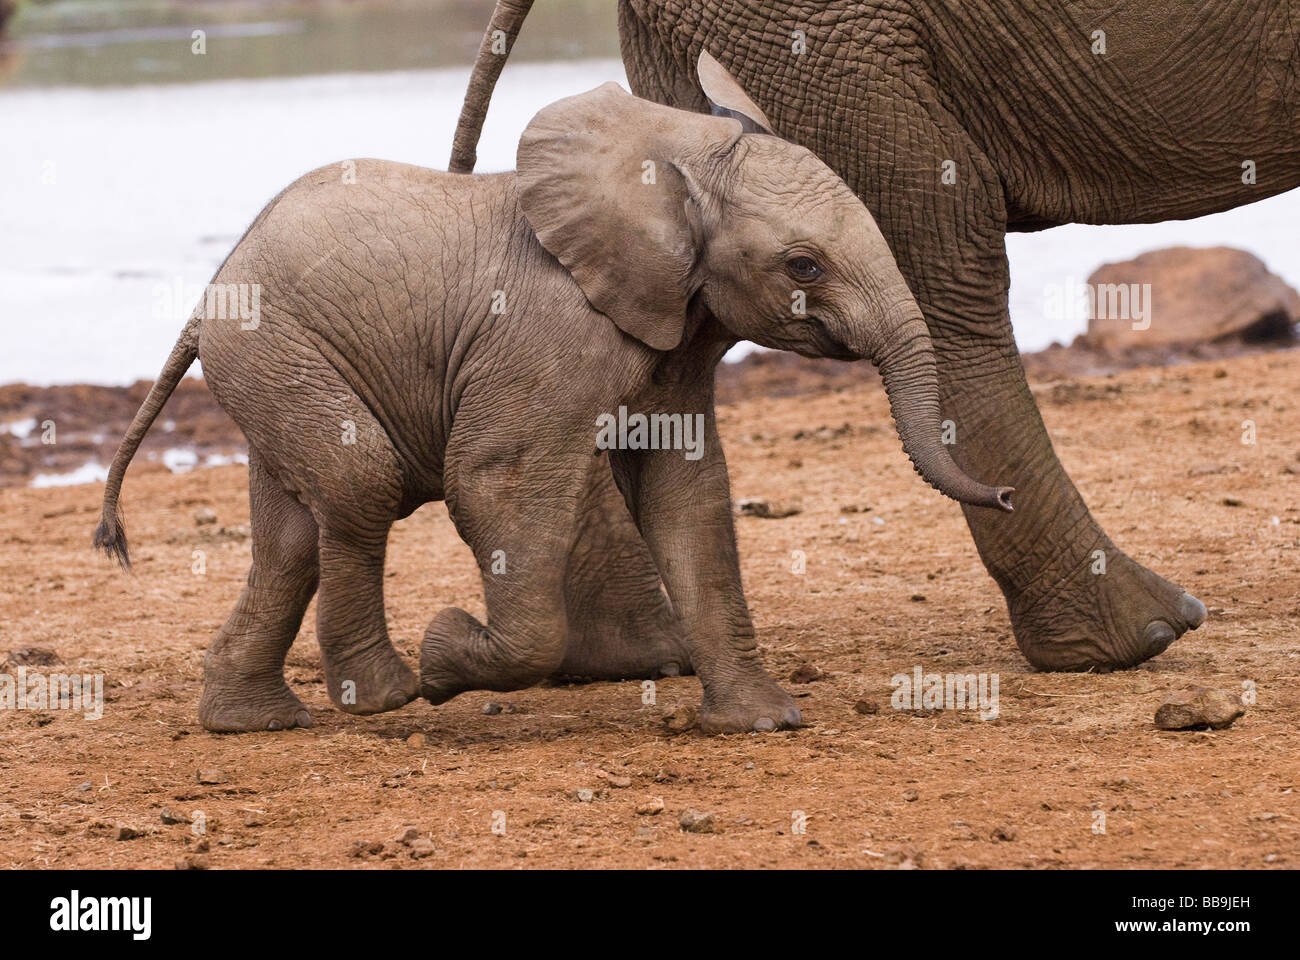 young African Elephant baby Loxodonta africana THE ARK ABERDARE NATIONAL PARK KENYA East Africa Stock Photo